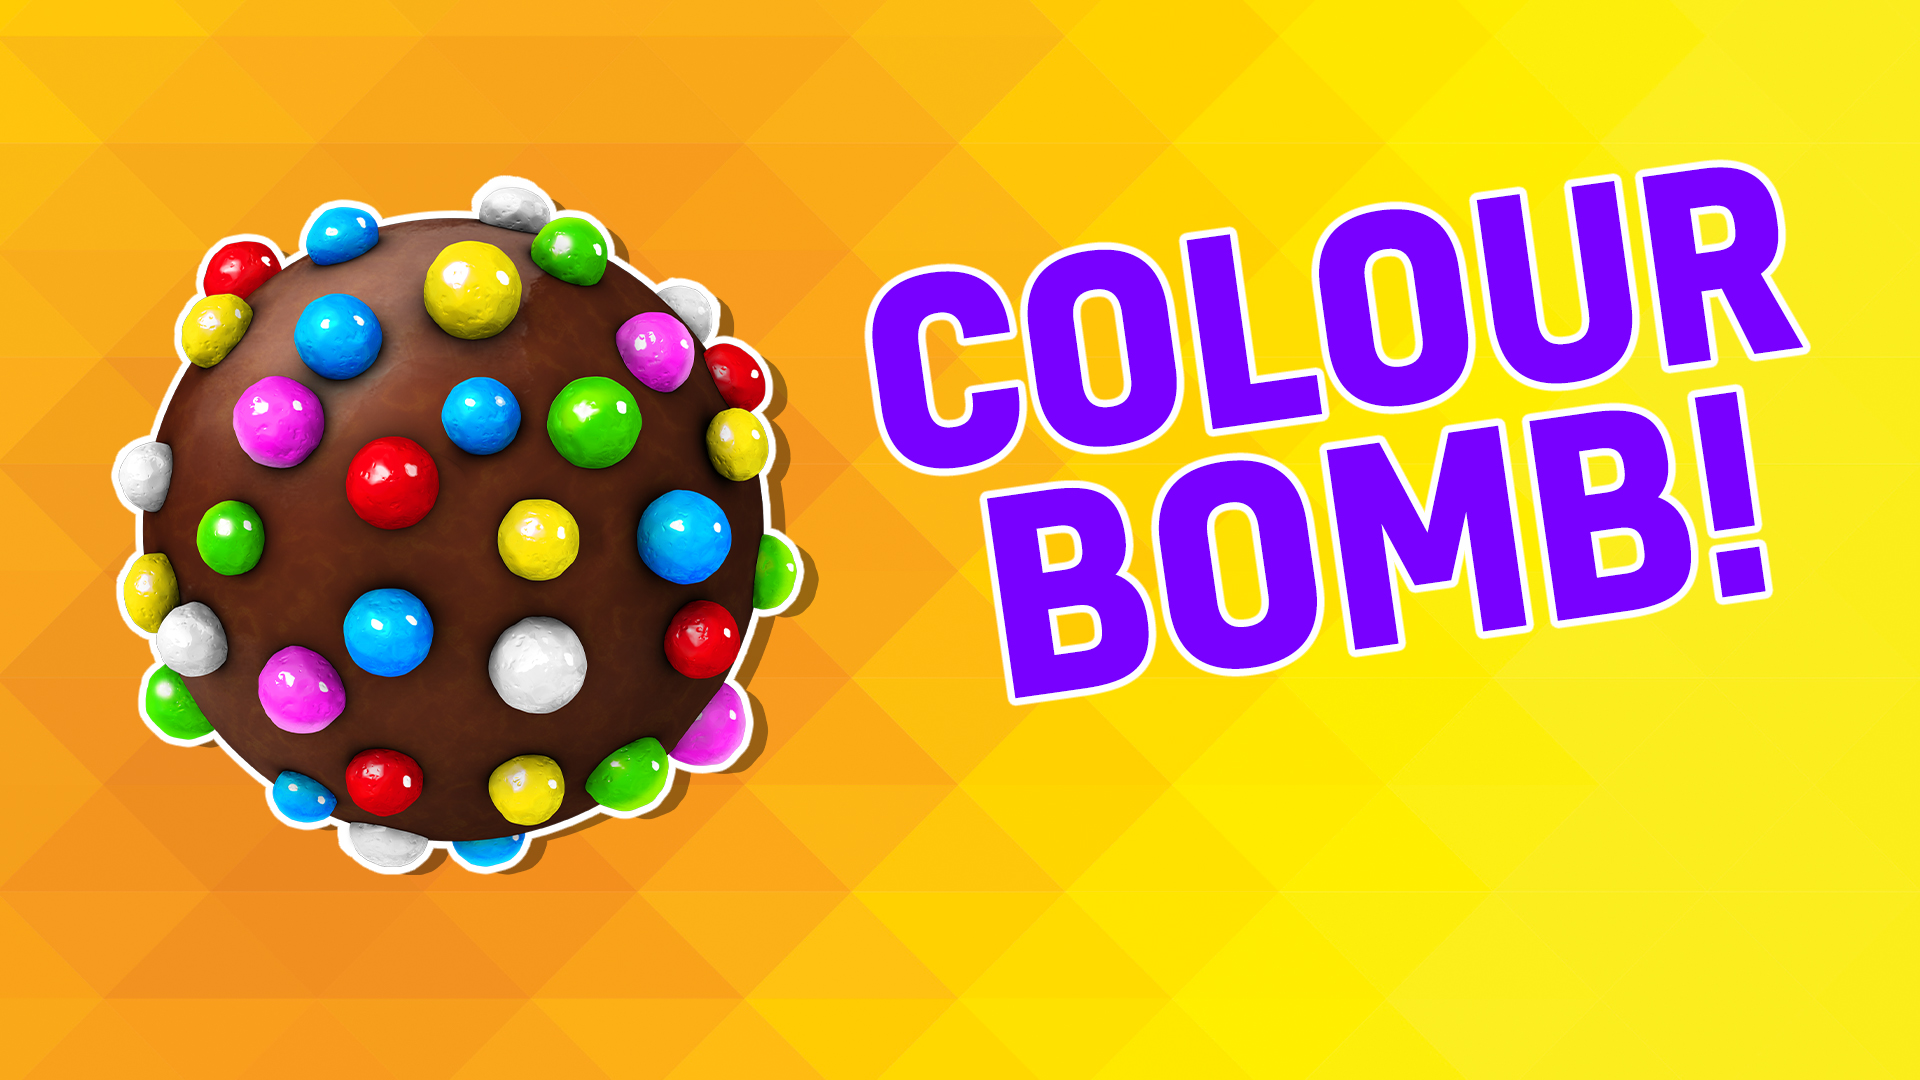 Colour bomb